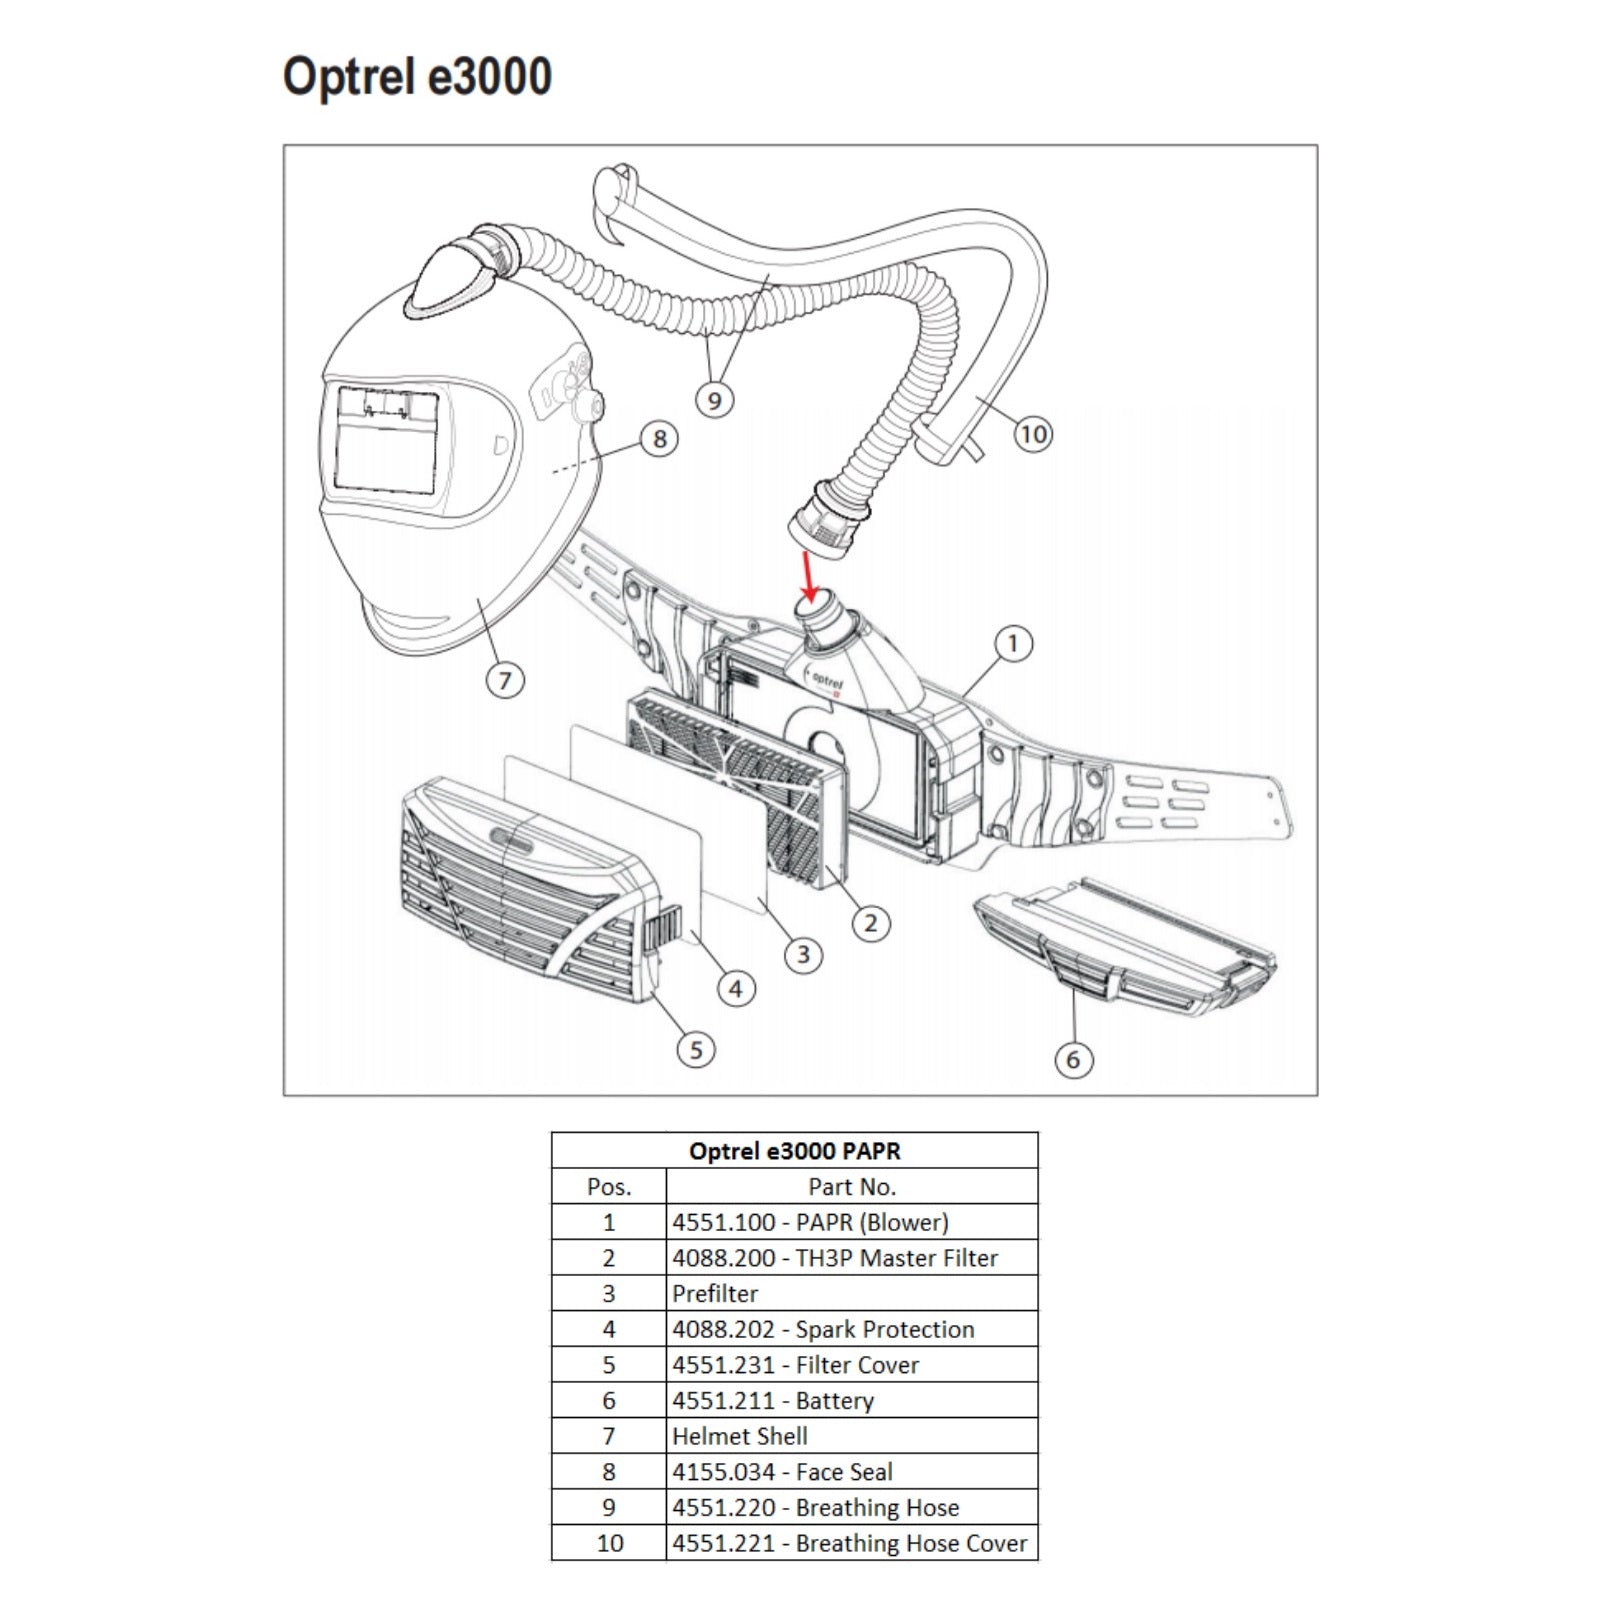 Optrel e3000 PAPR Breathing Hose (4551.220)